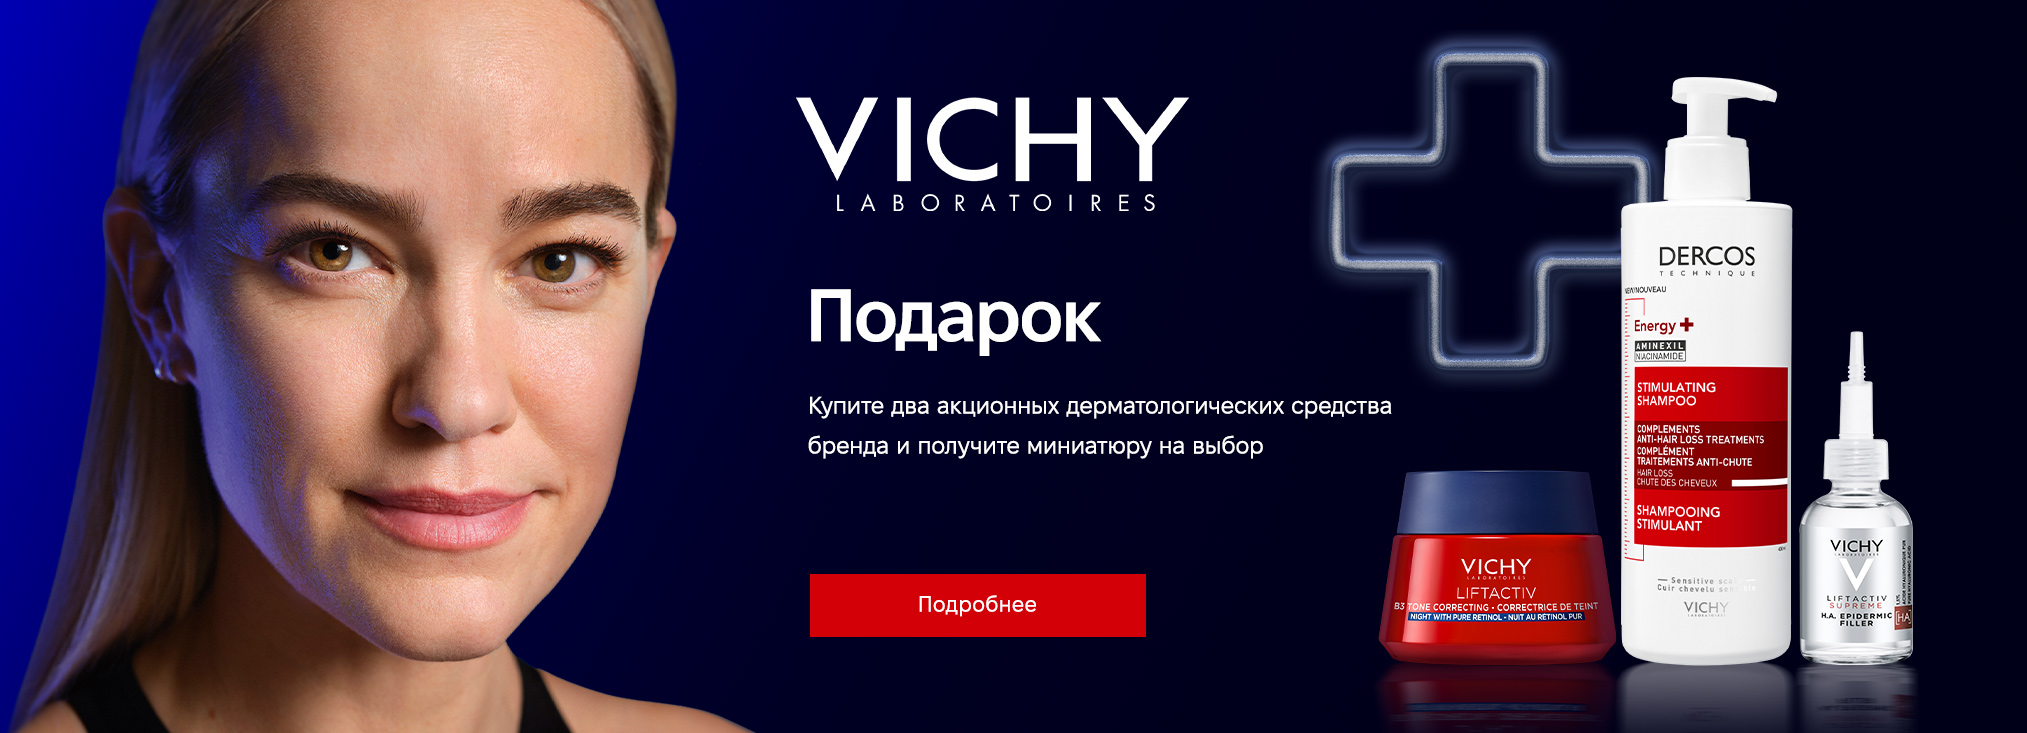 Vichy_actions